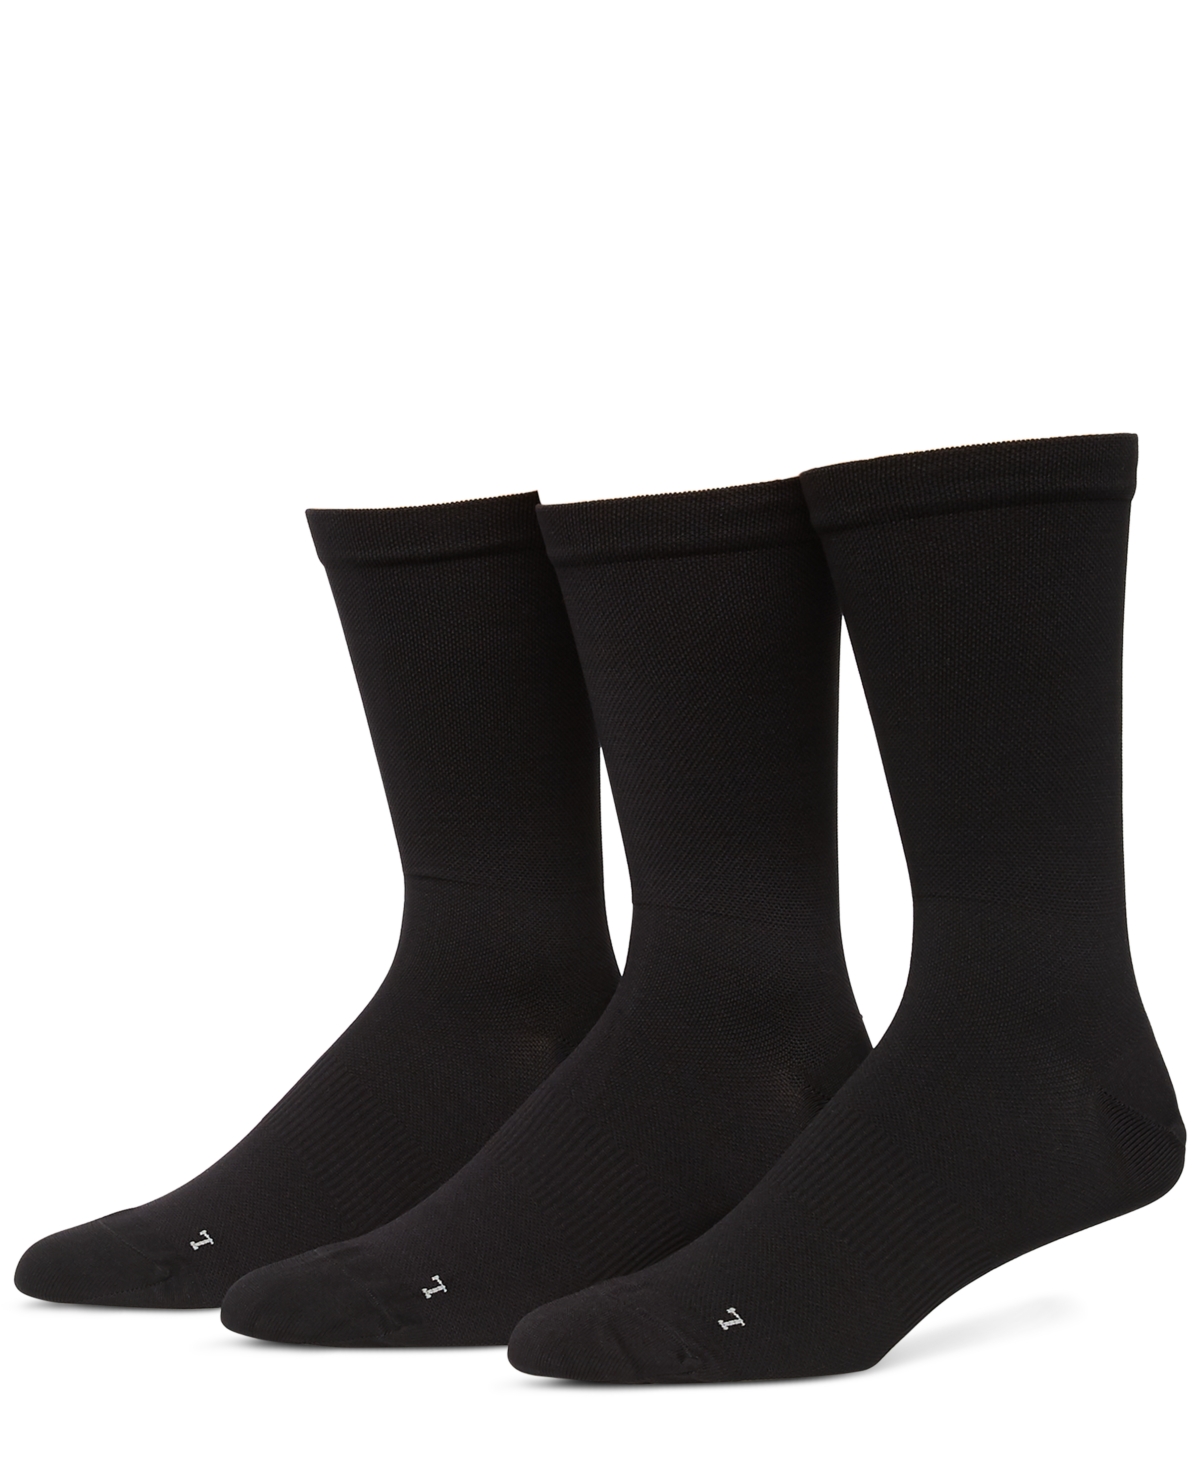 Men's 3-Pack Pique Flat Socks - Anthracite